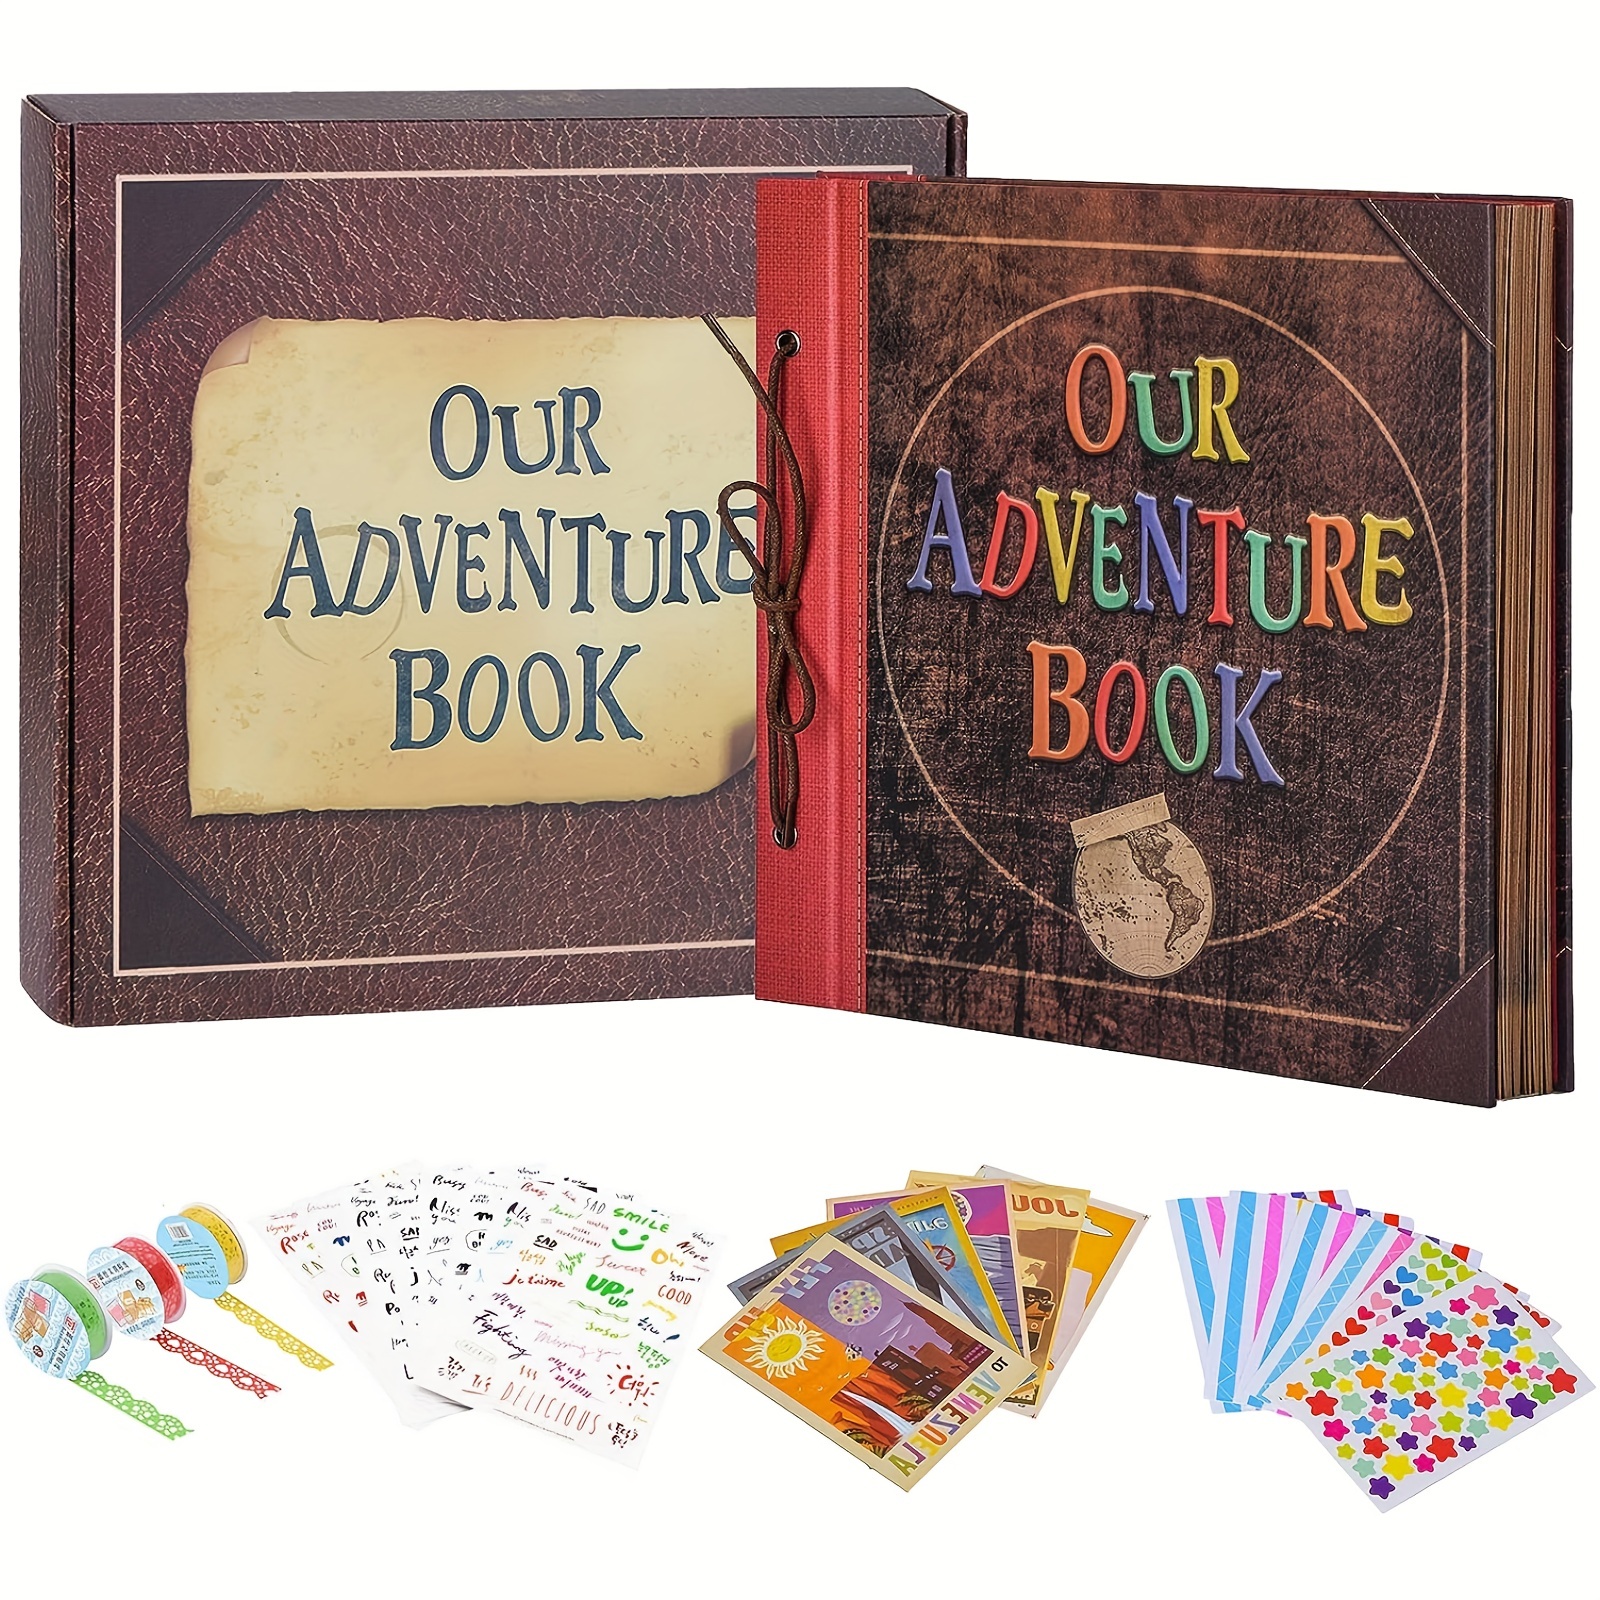 Anniversary Photo Album, Our Adventure Book Scrapbook with 3D Wooden C